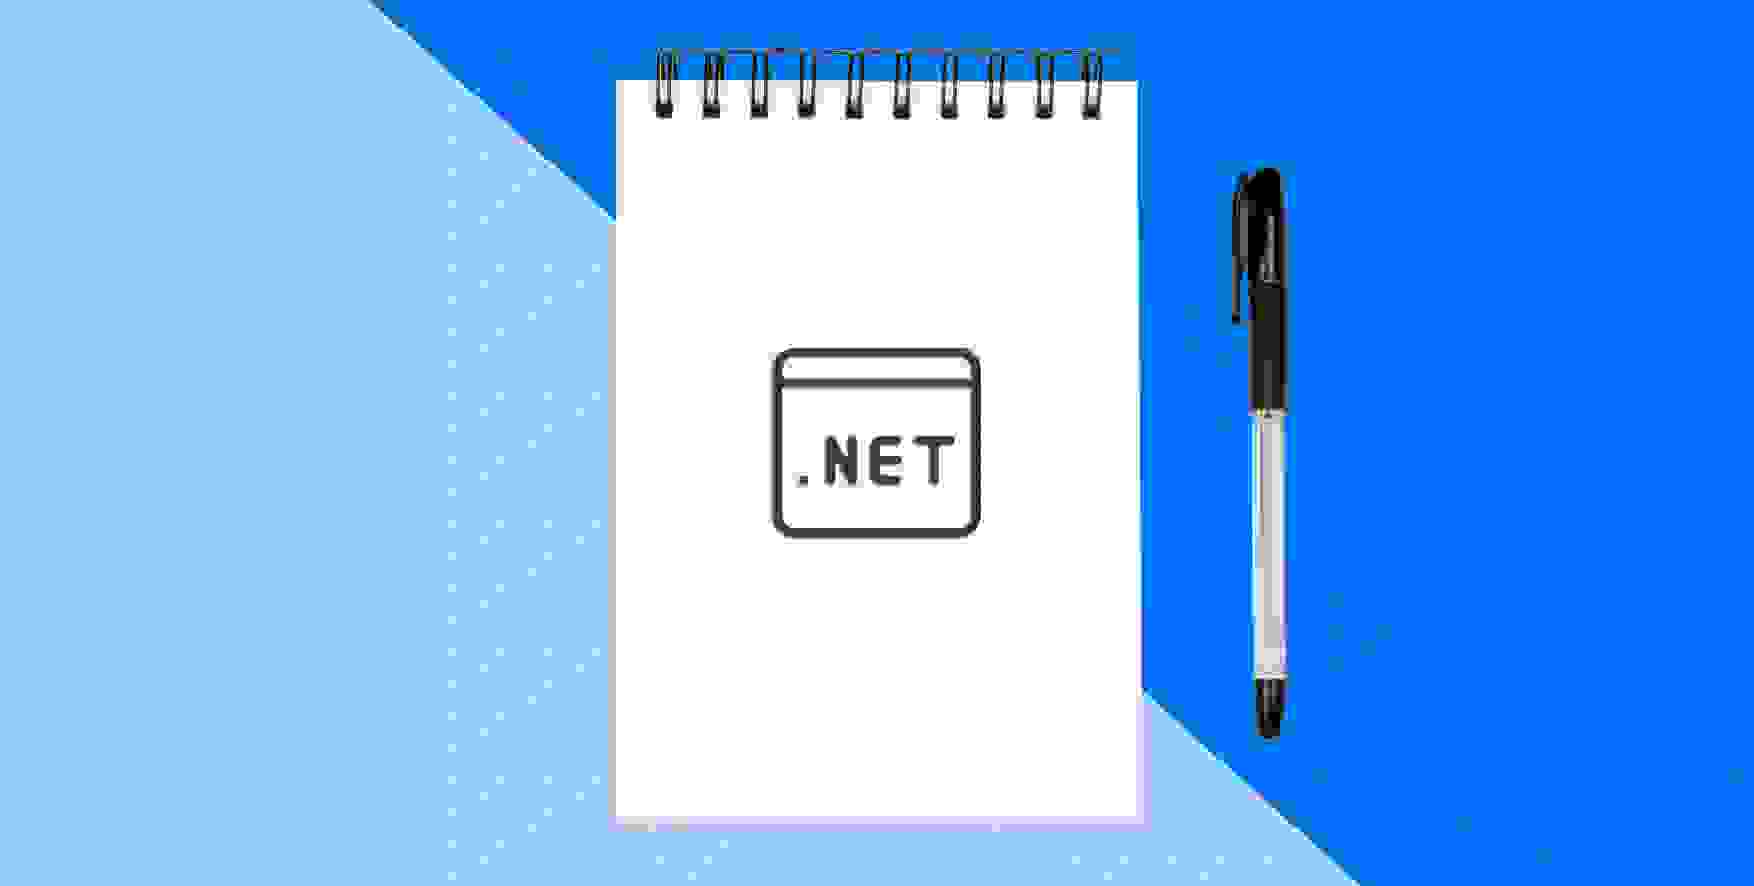 .NET written on a piece of notepad